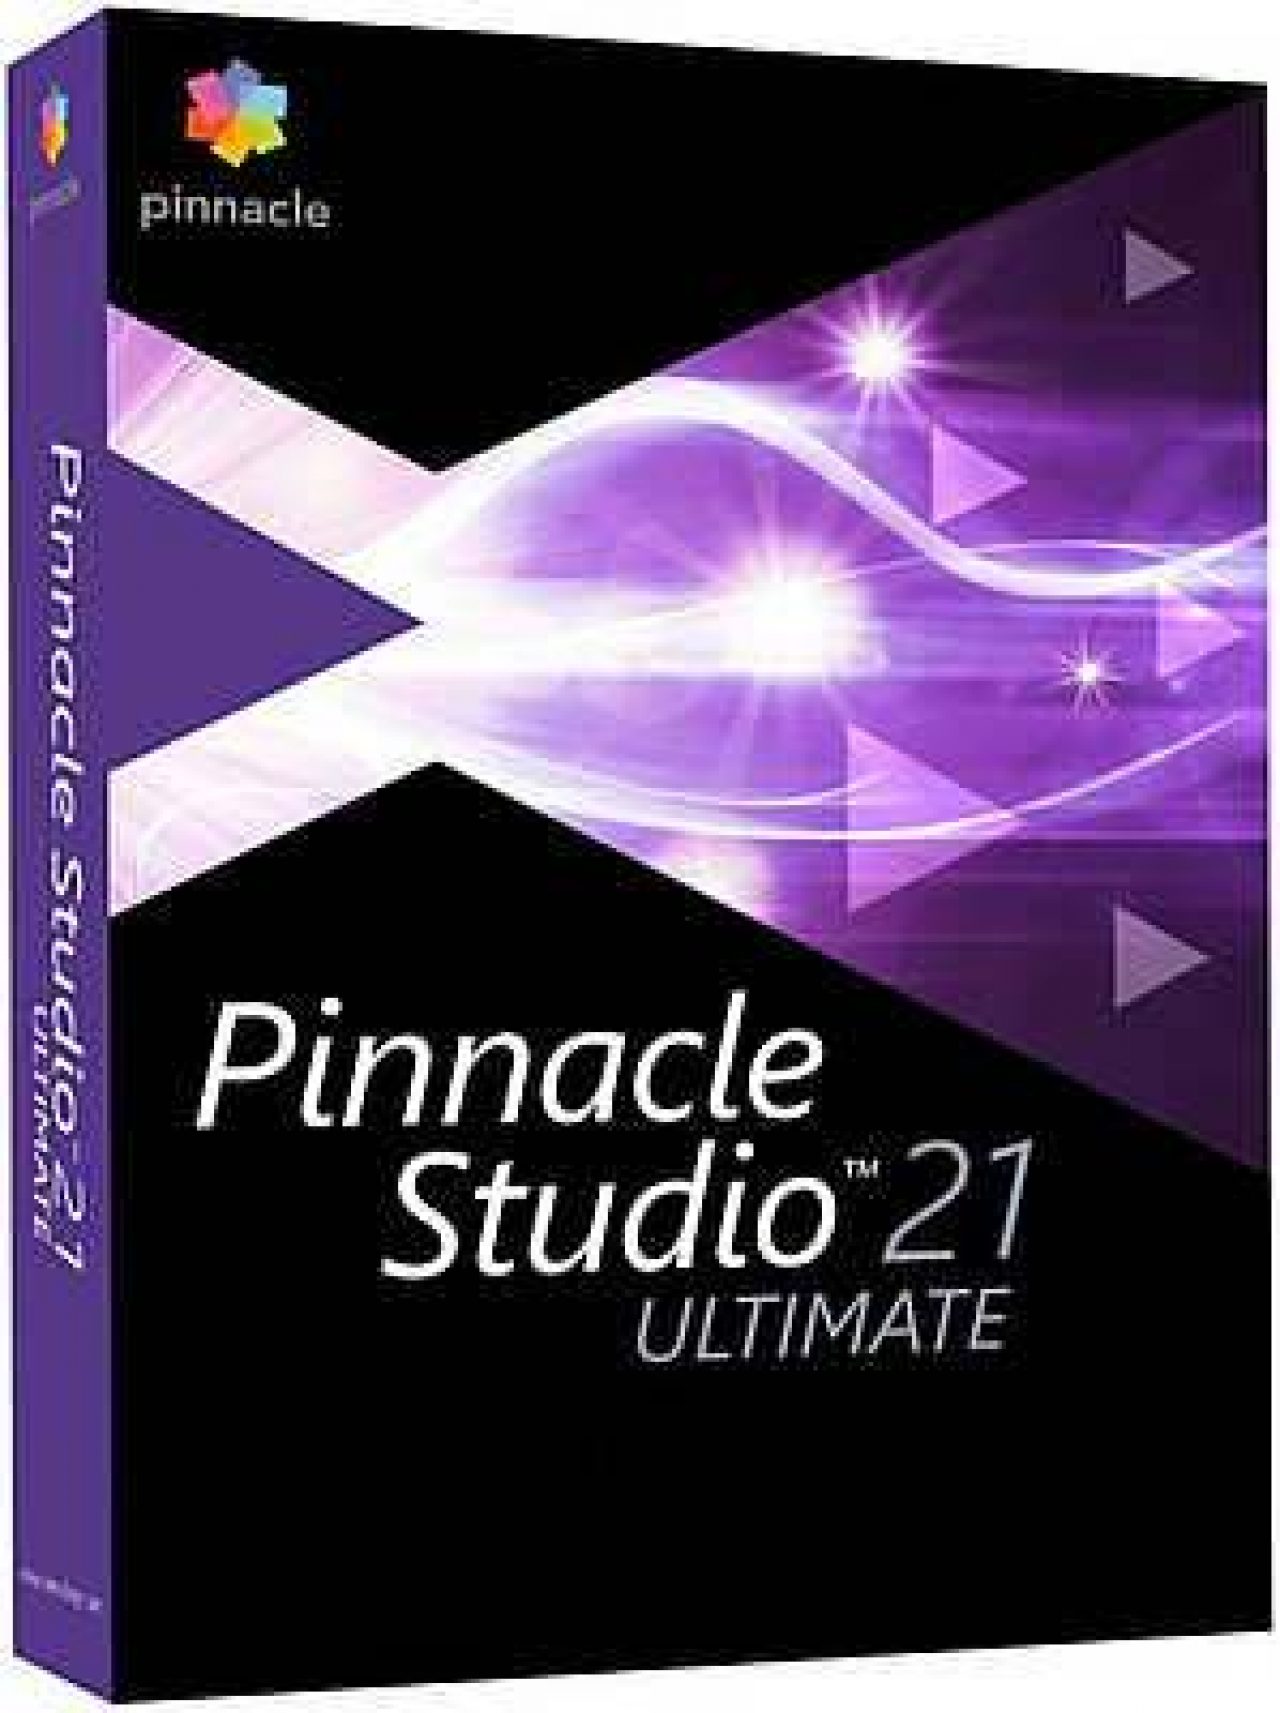 Pinnacle Studio 21 Ultimate | Photography Blog